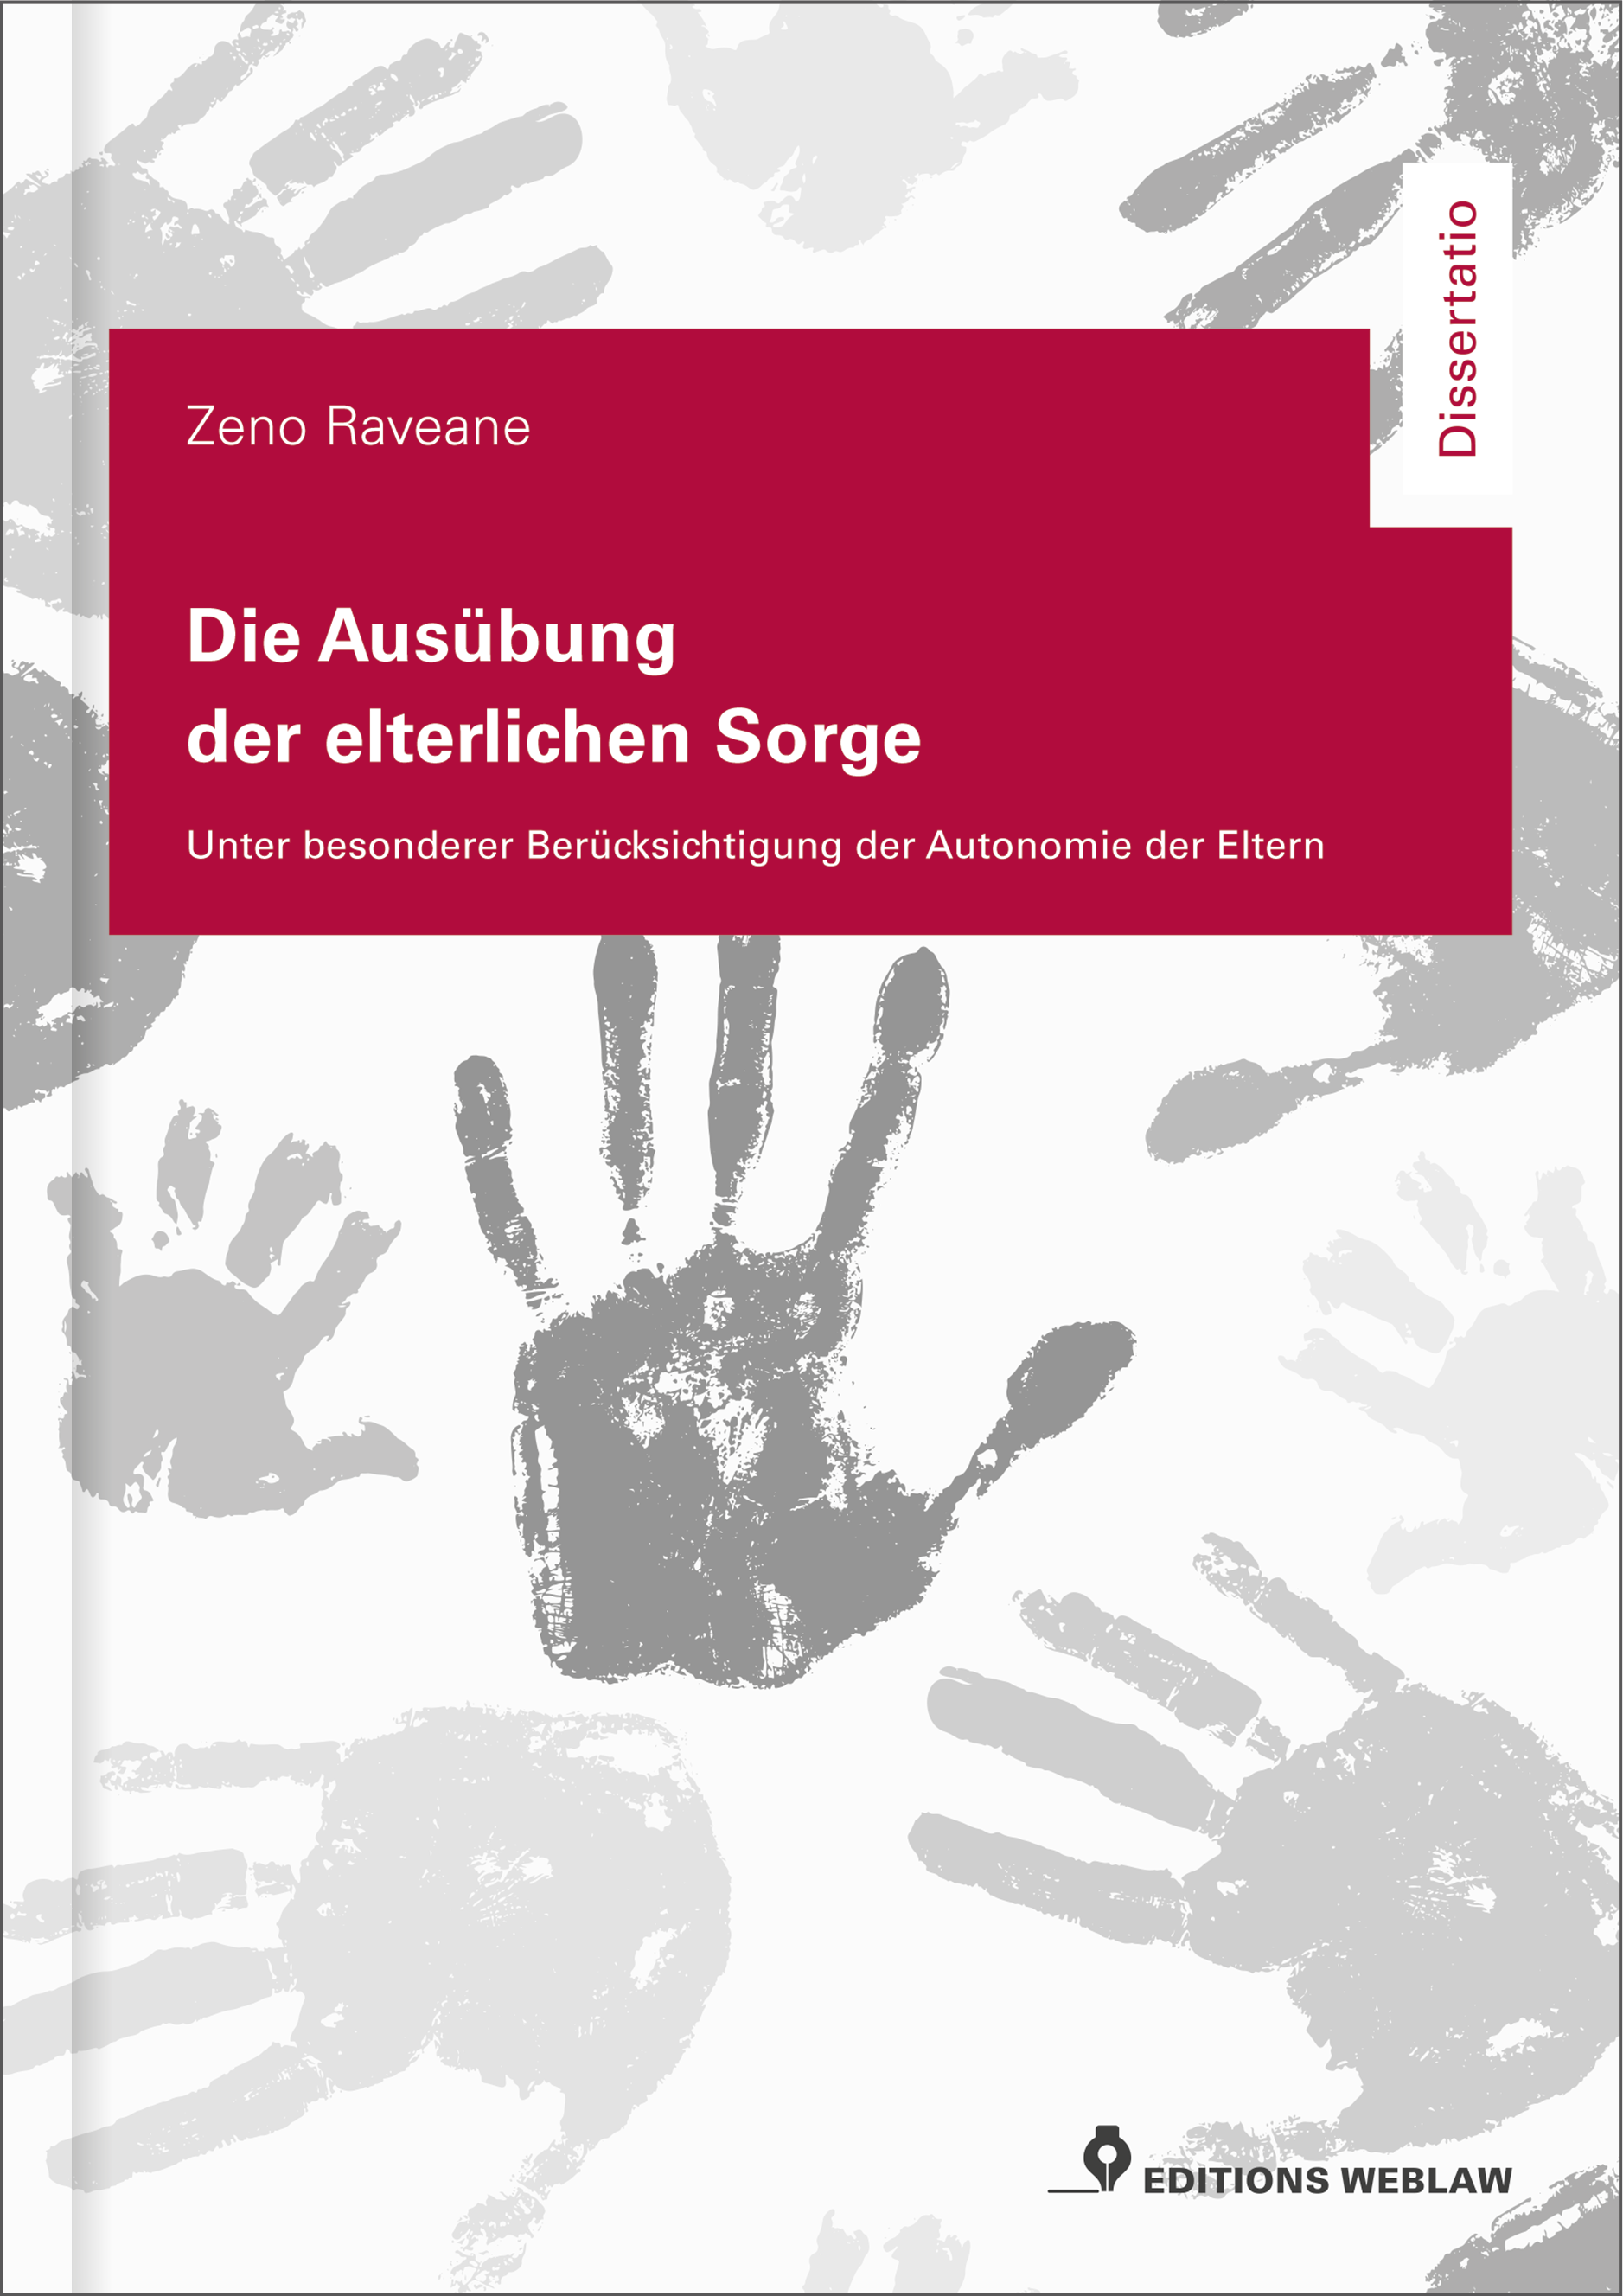 Nouveau aux Editions Weblaw : Zeno Raveane, Die Ausübung der elterlichen Sorge.